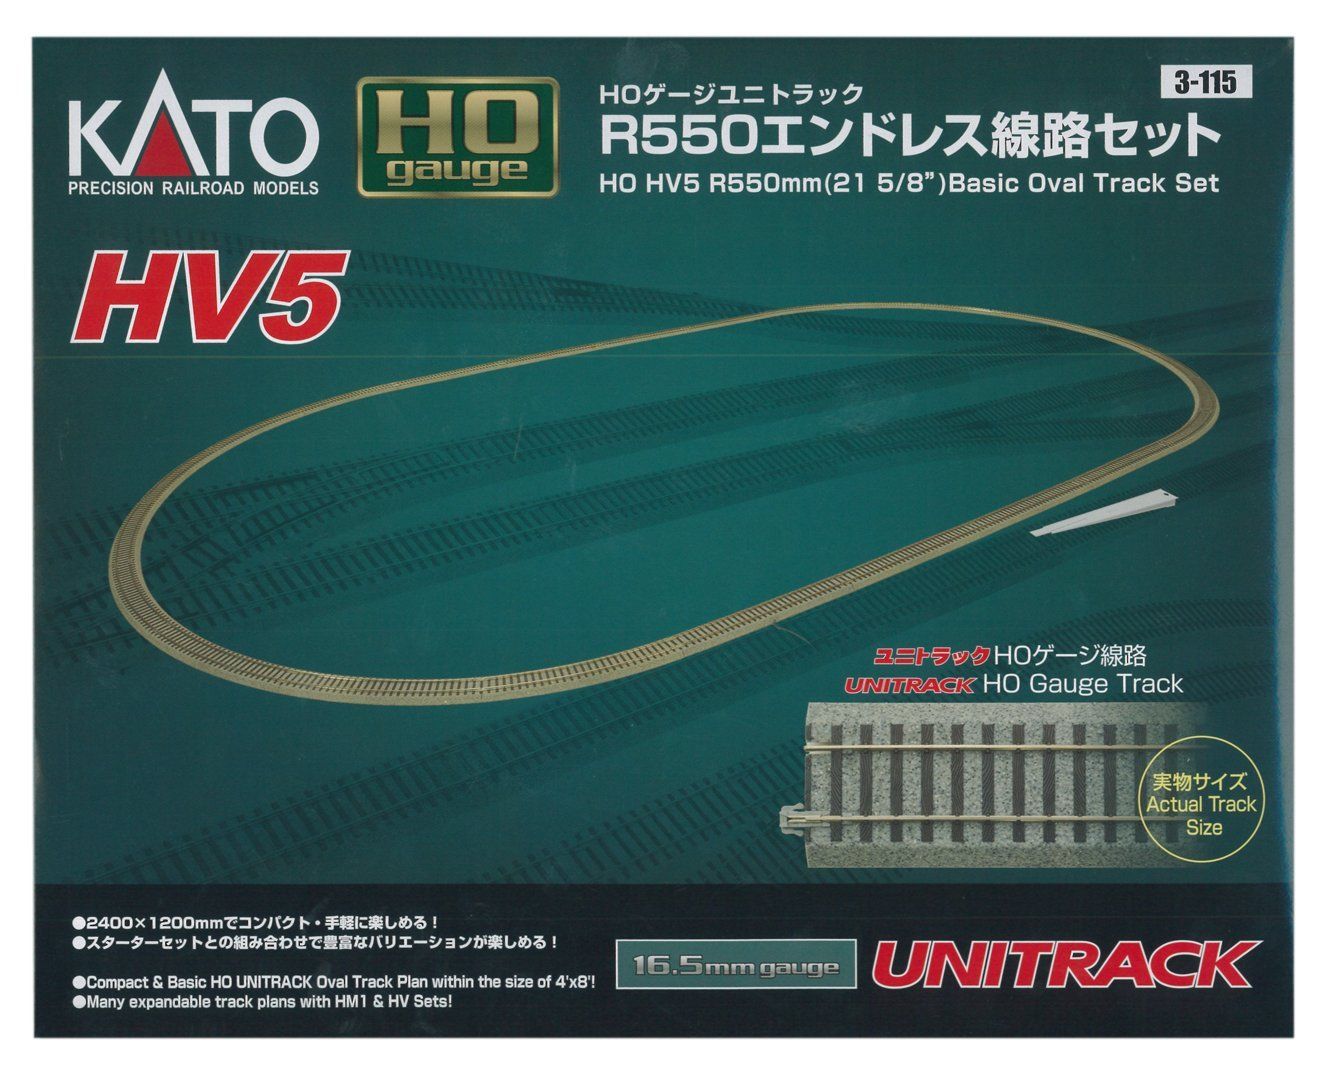 Kato 3-115 Unitrack HV5 R550mm 821 5/8`` Basic Oval Track Set - BanzaiHobby